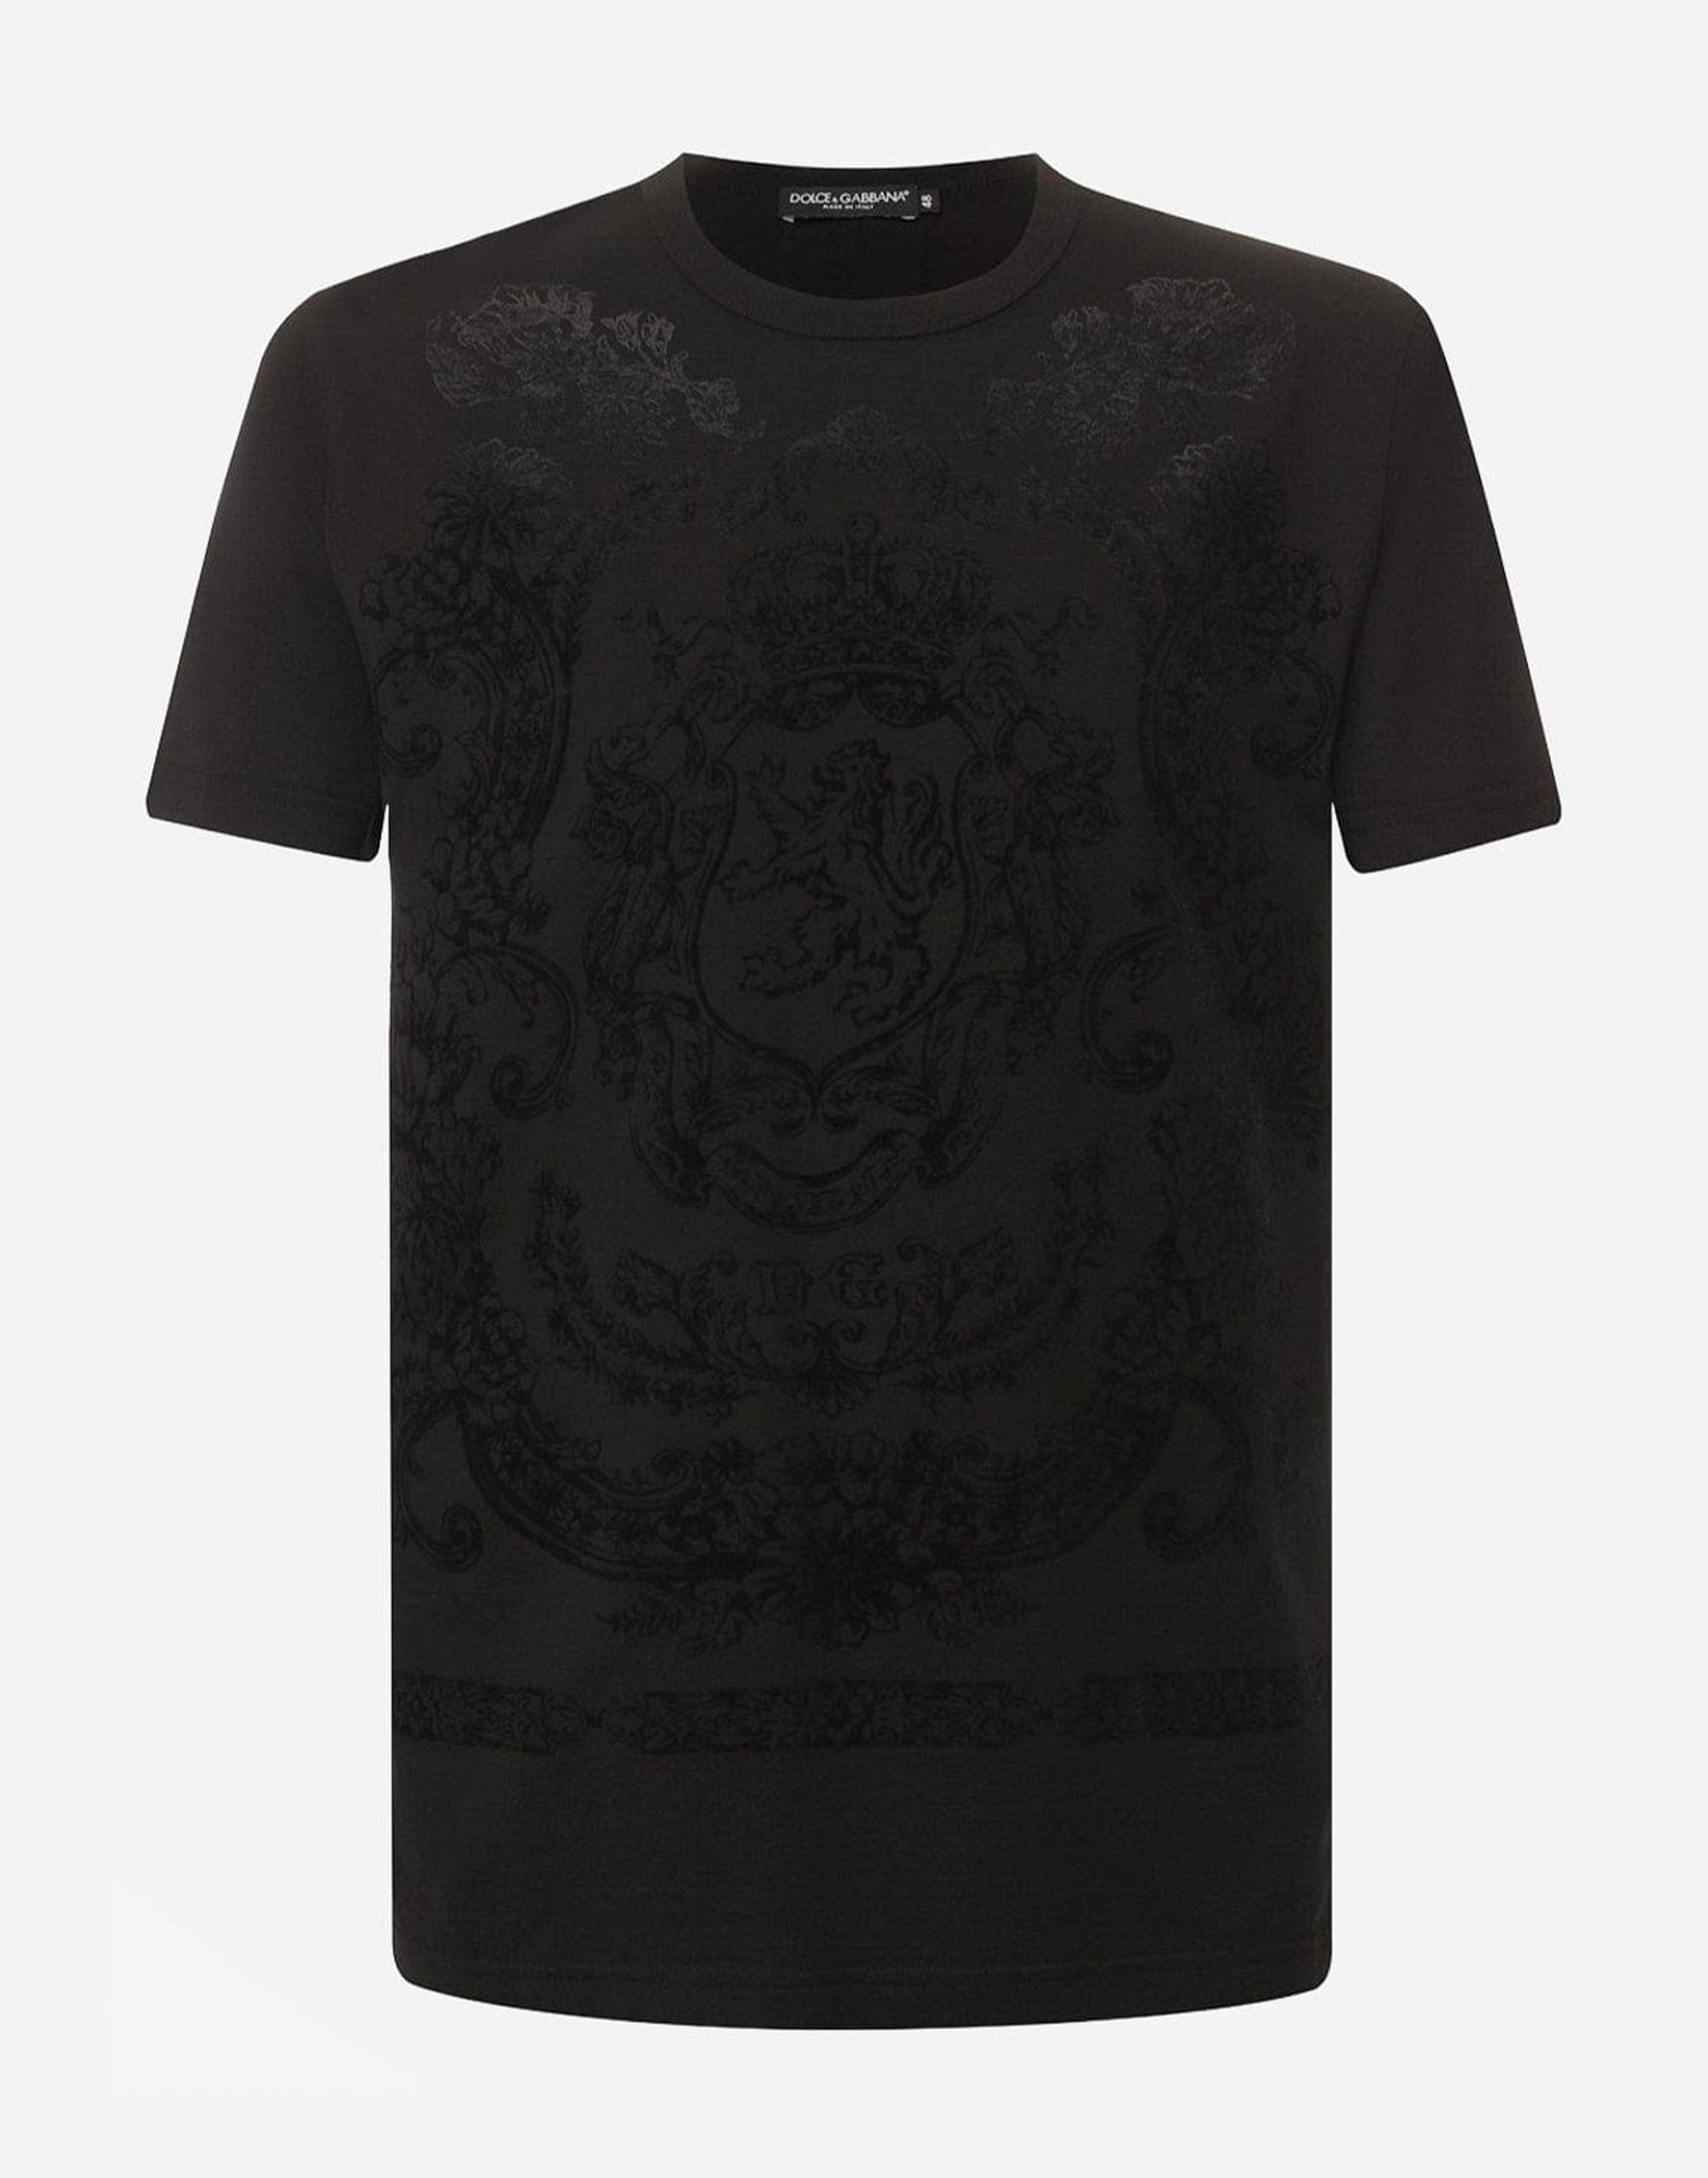 Dolce & Gabbana Coat of Arms T-Shirt